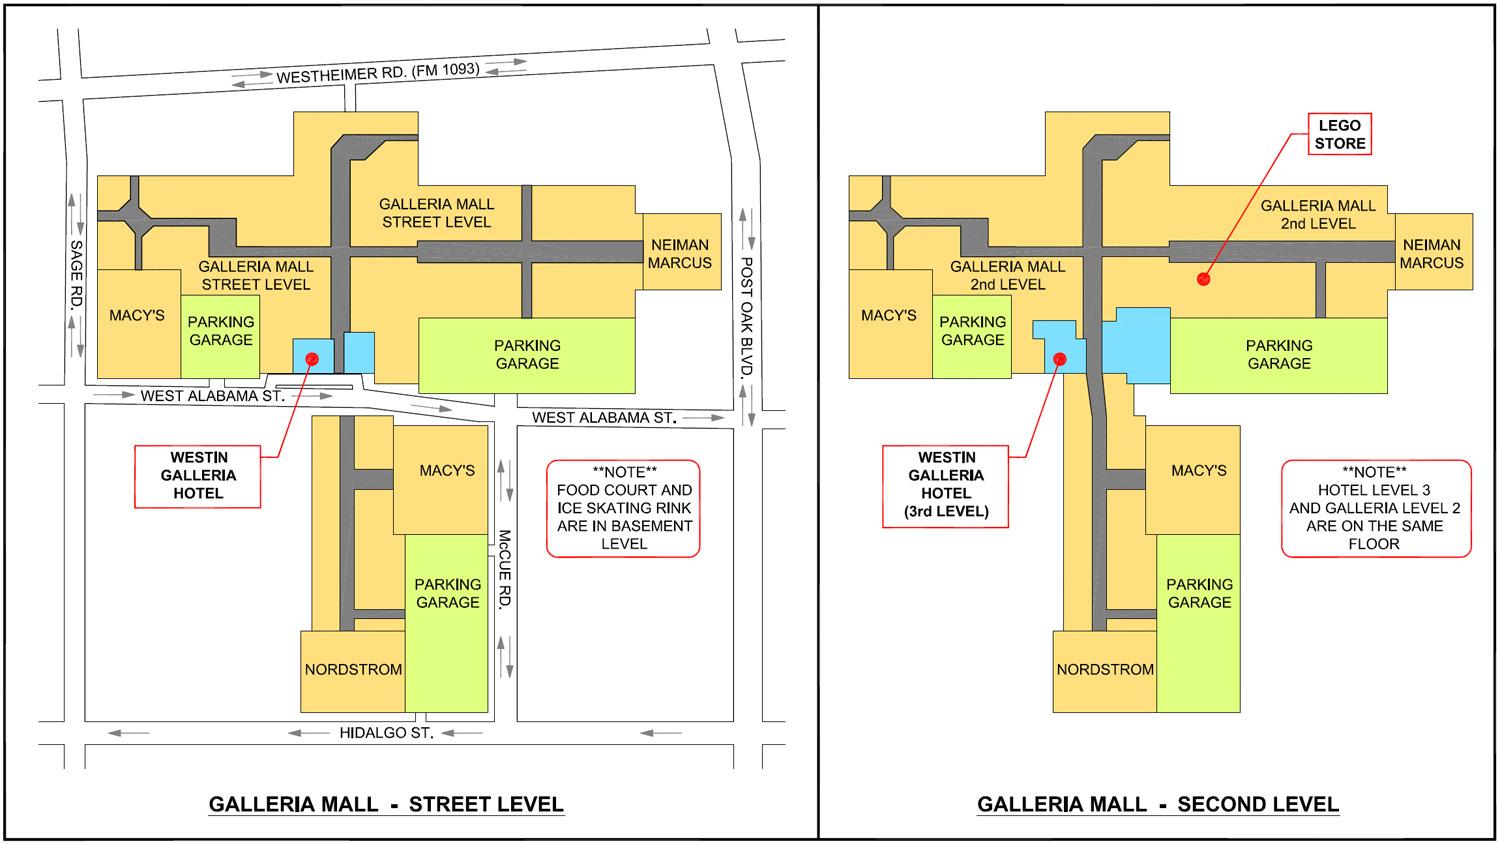 Galleria mall map - Houston Galleria mall map (Τέξας - ΗΠΑ)